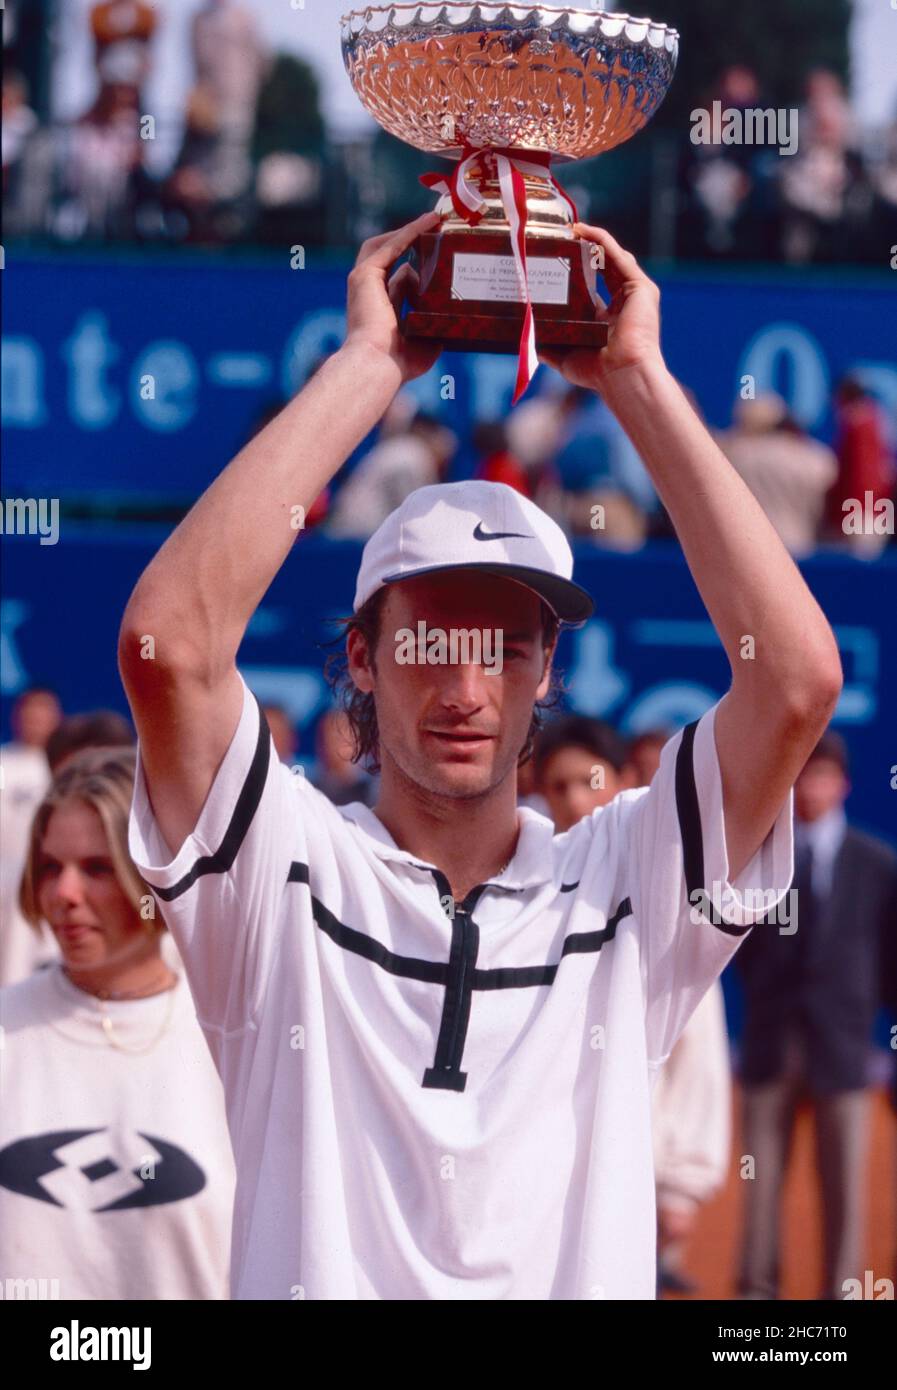 Spanish tennis player Carlos Moya, 1990s Stock Photo